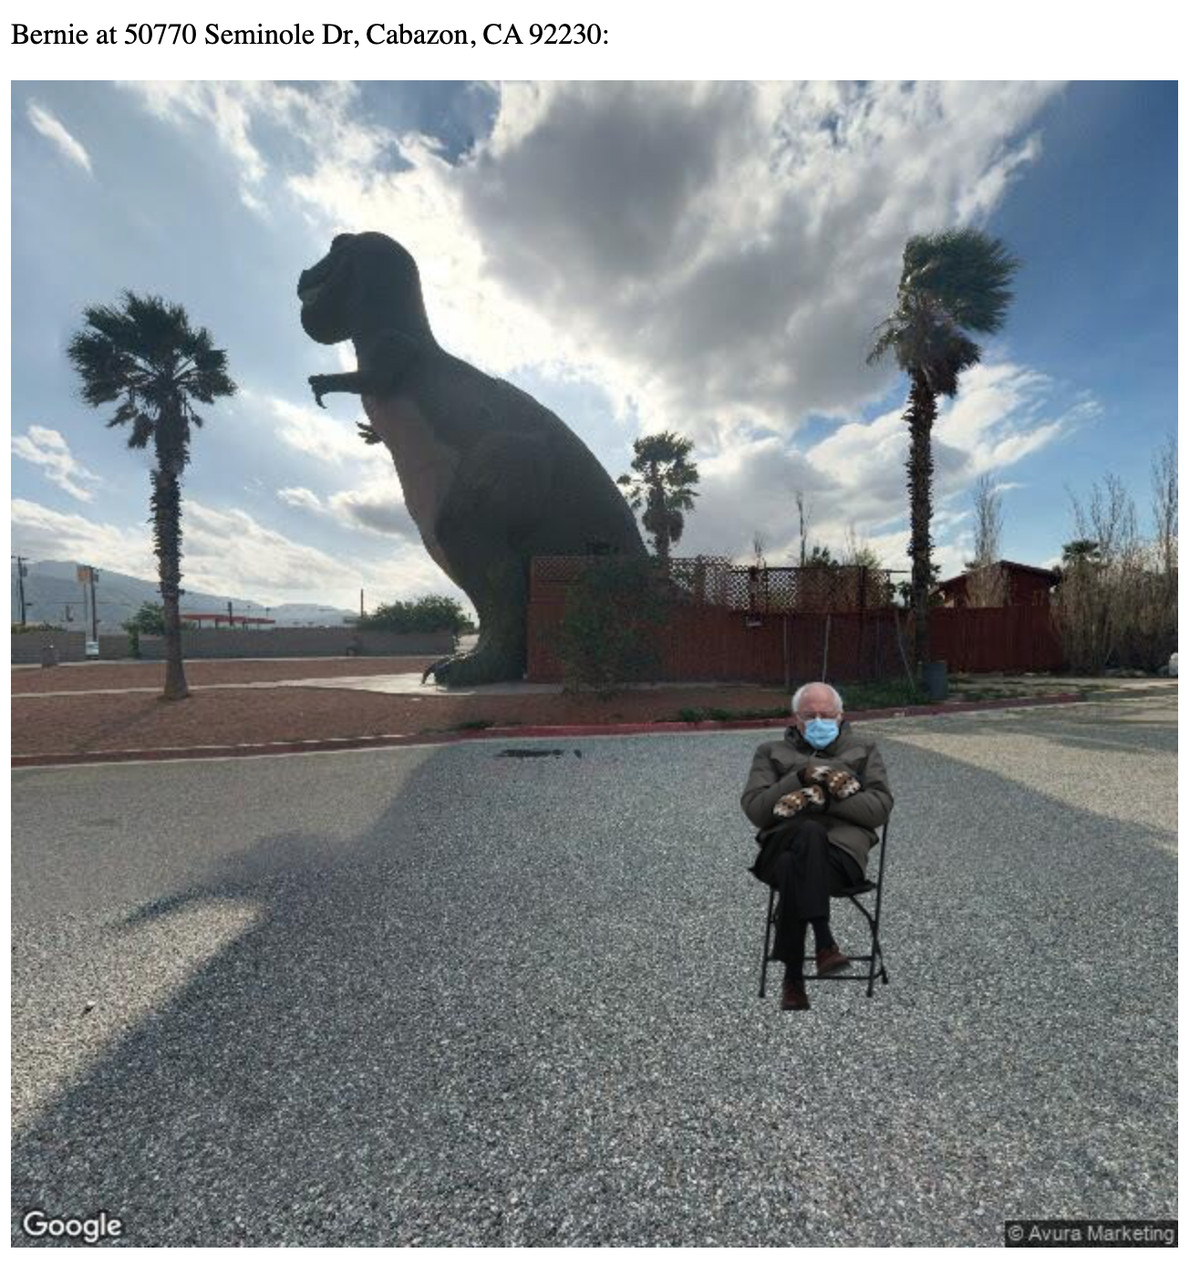 Bernie Sanders sitting in front of a t-rex statue